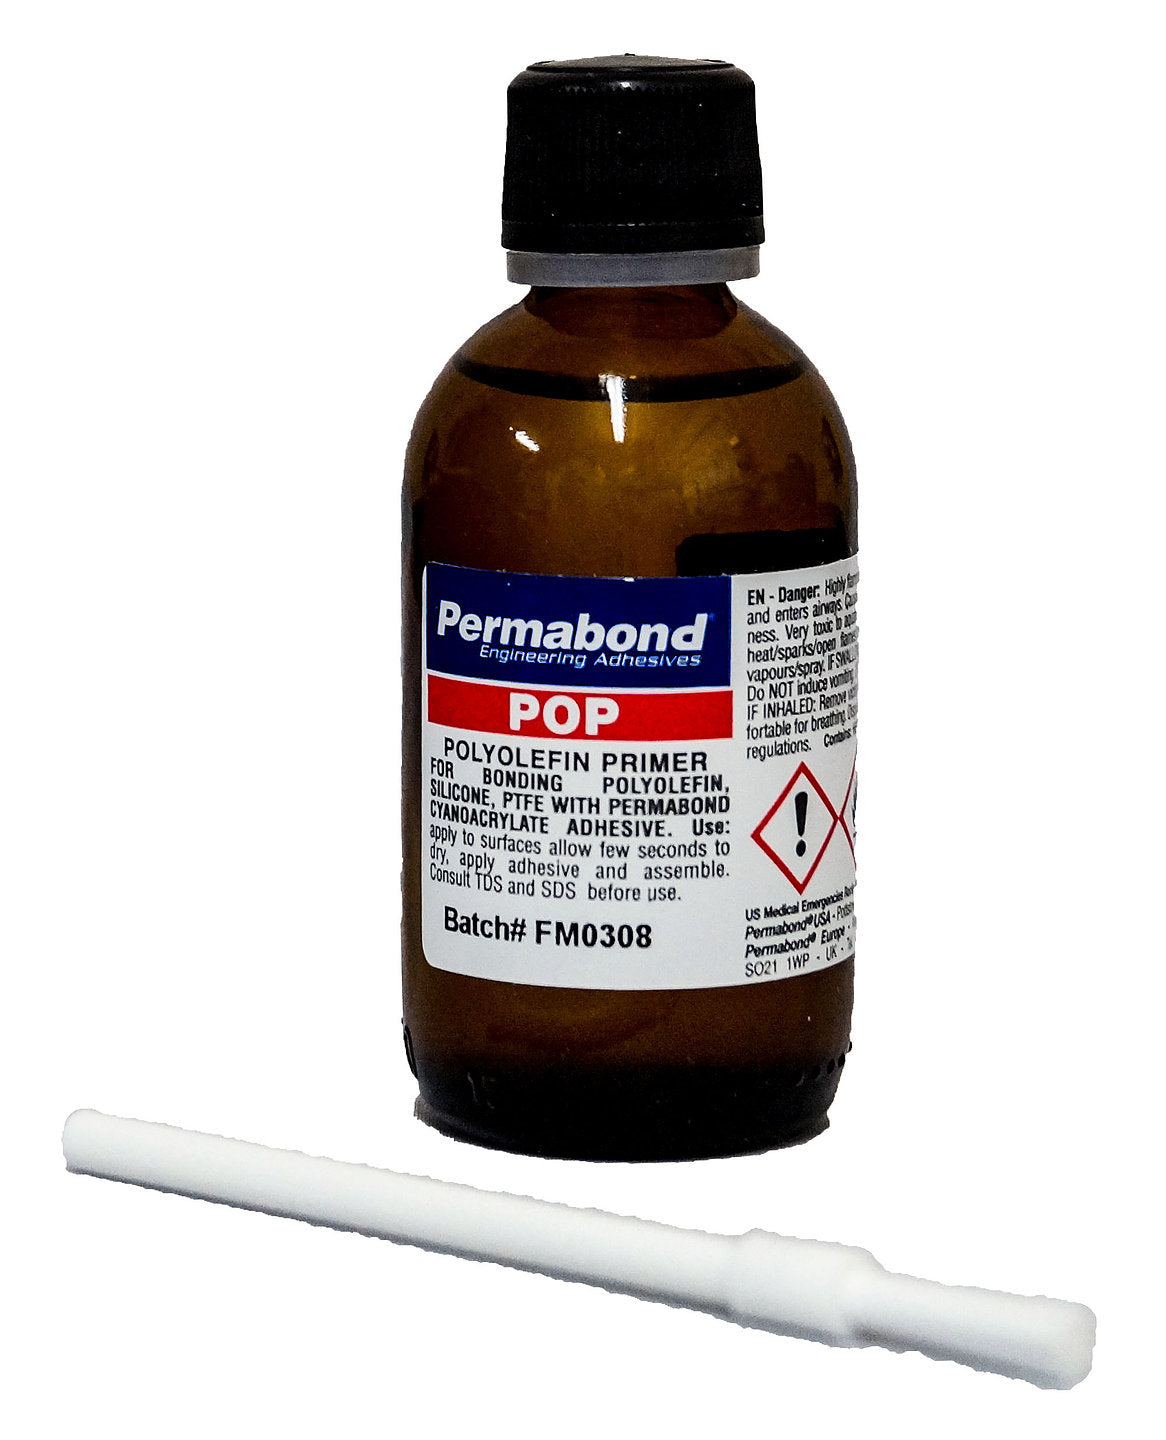 Permabond POP Polyolefin Primer for use with cyanoacrylate